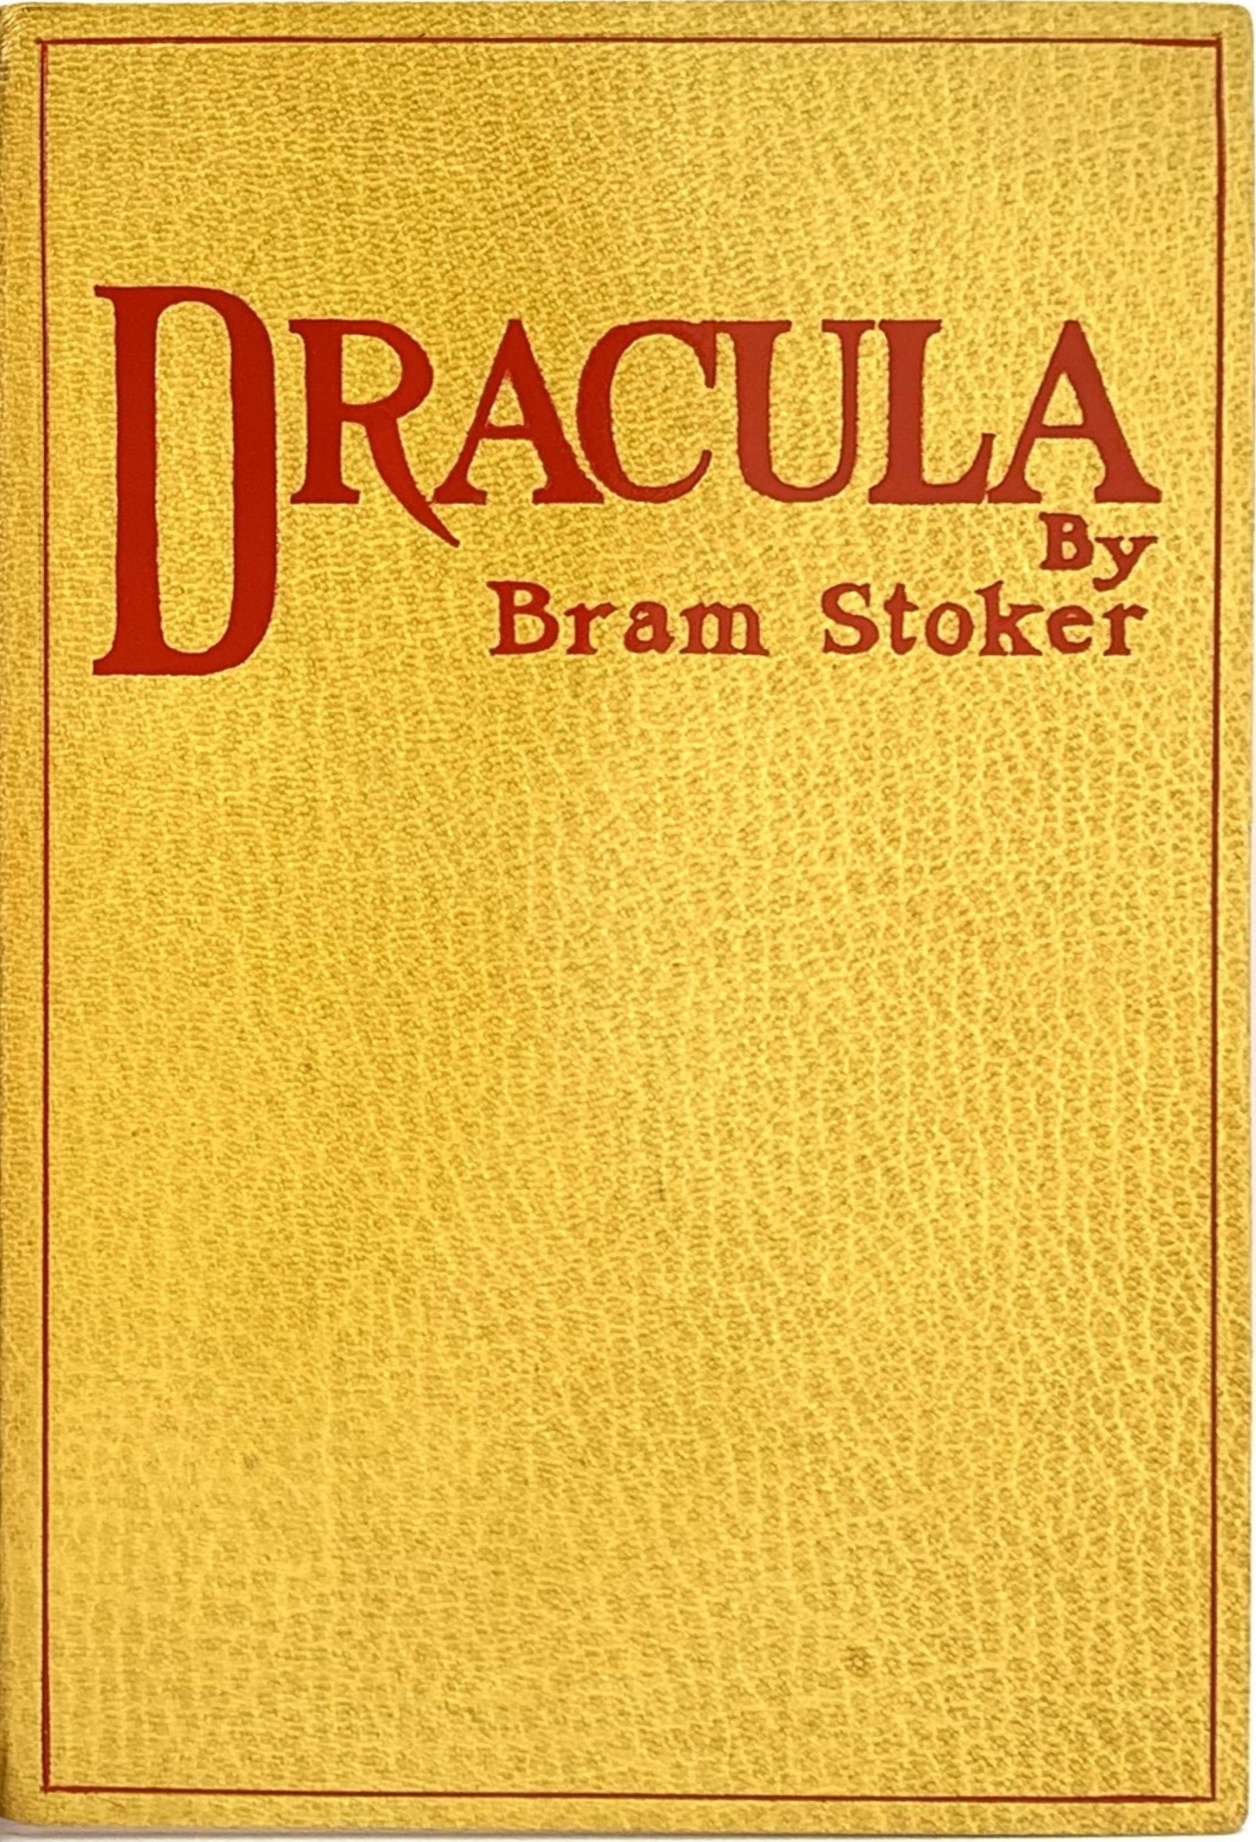 Dracula1st.jpeg